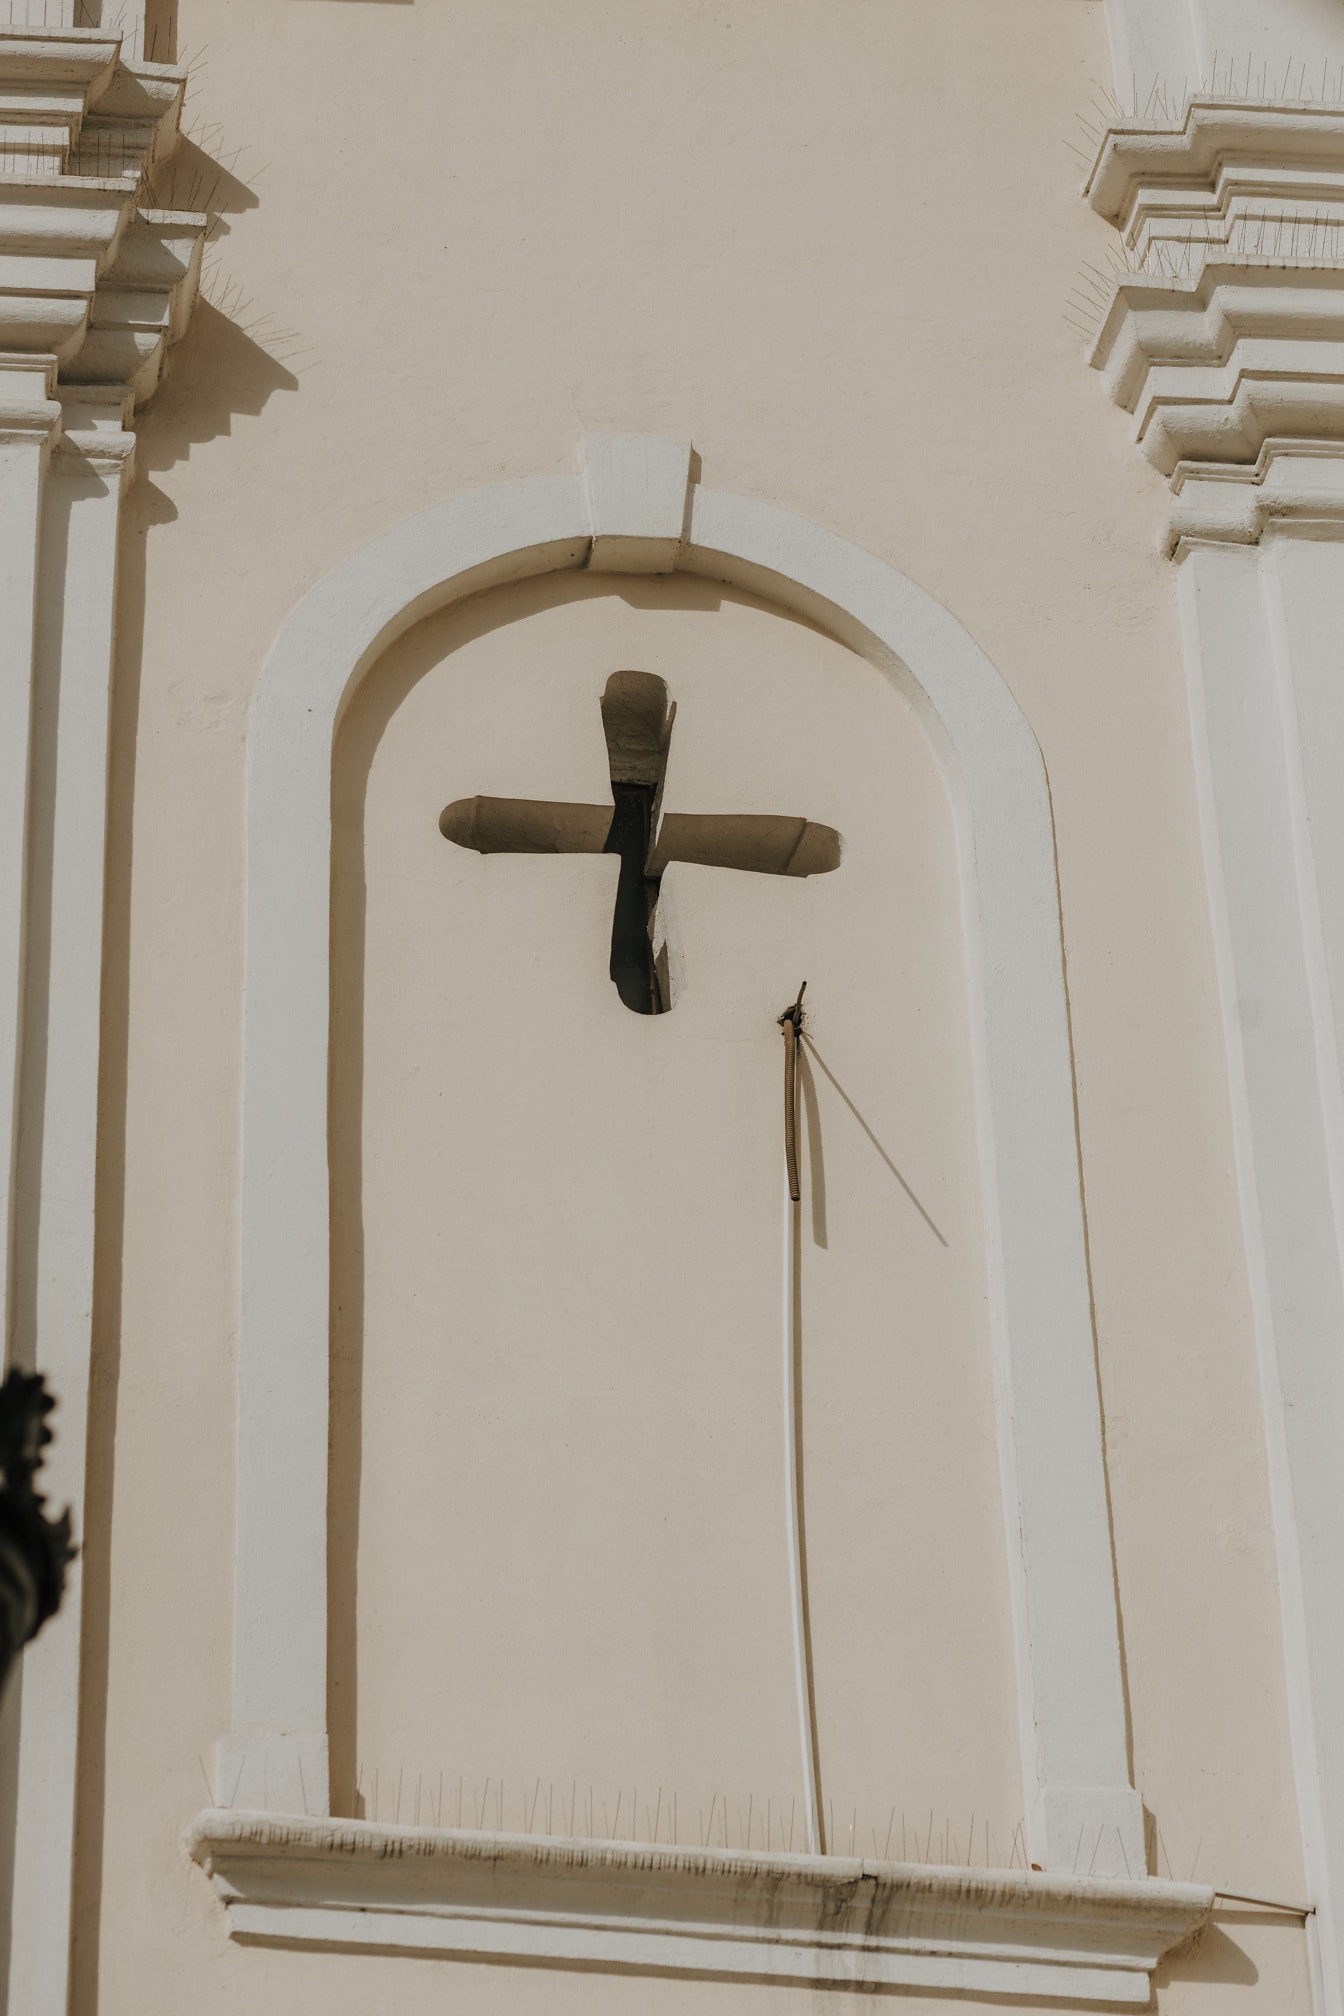 Kreuzförmiges christliches Ornament an der Wand